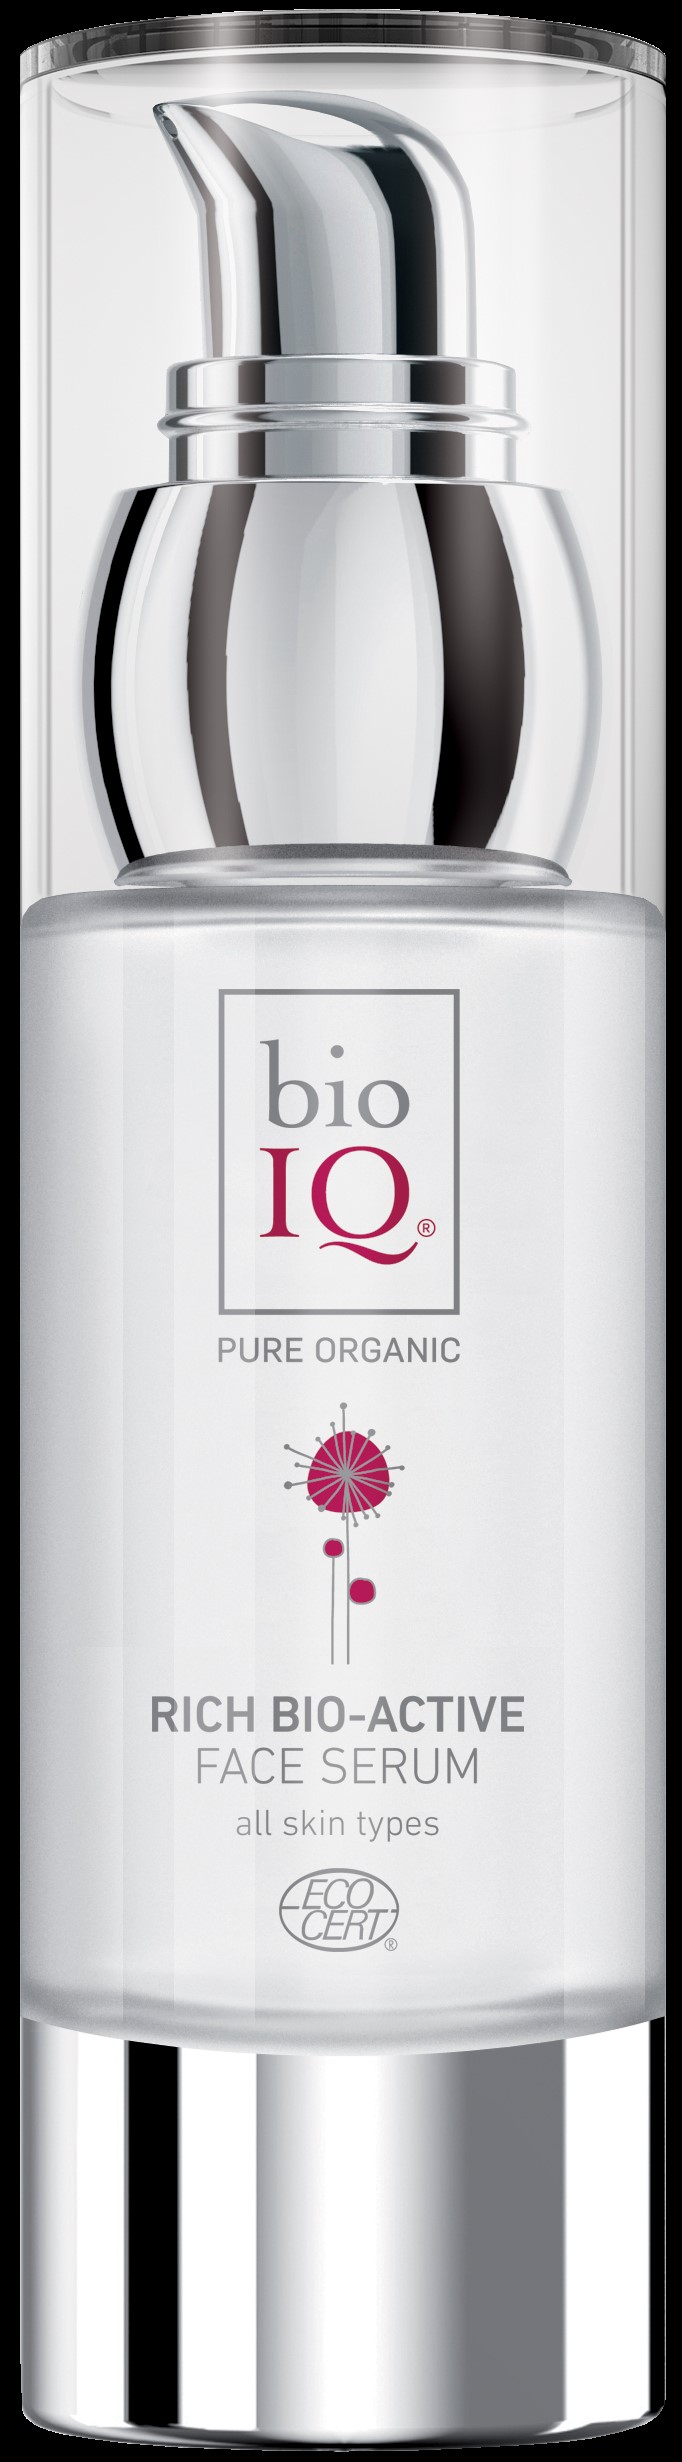 Bio IQ - Bogate bio-aktywne serum do twarzy 